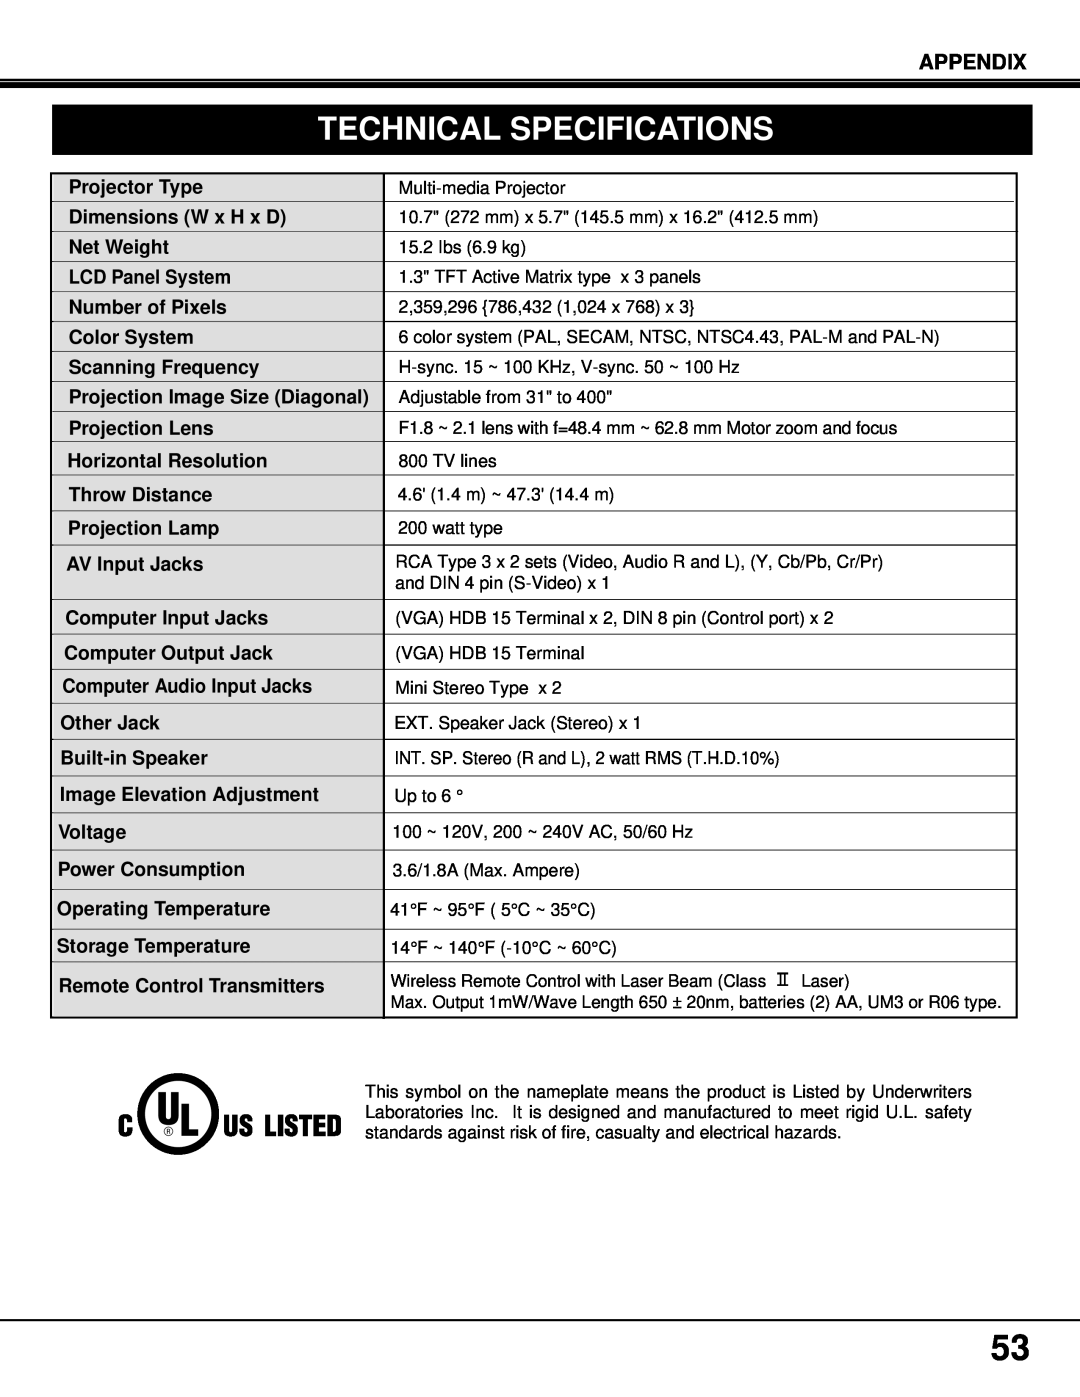 BOXLIGHT MP-37t manual Technical Specifications, Appendix 